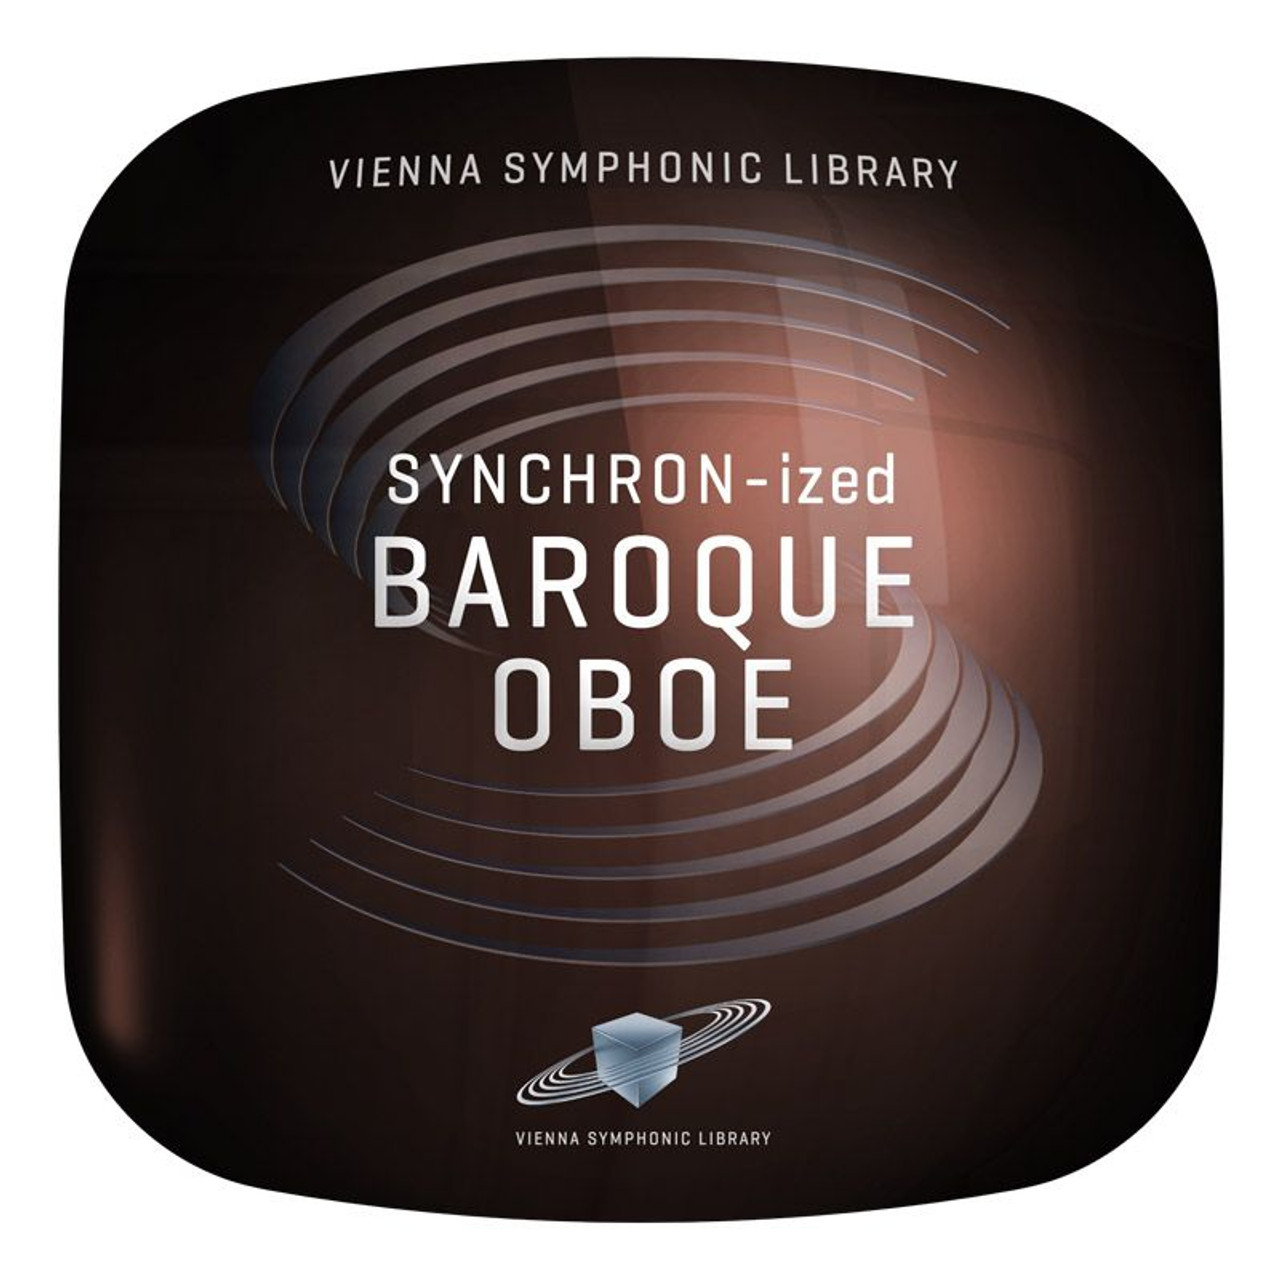 SYNCHRON-ized Baroque Oboe